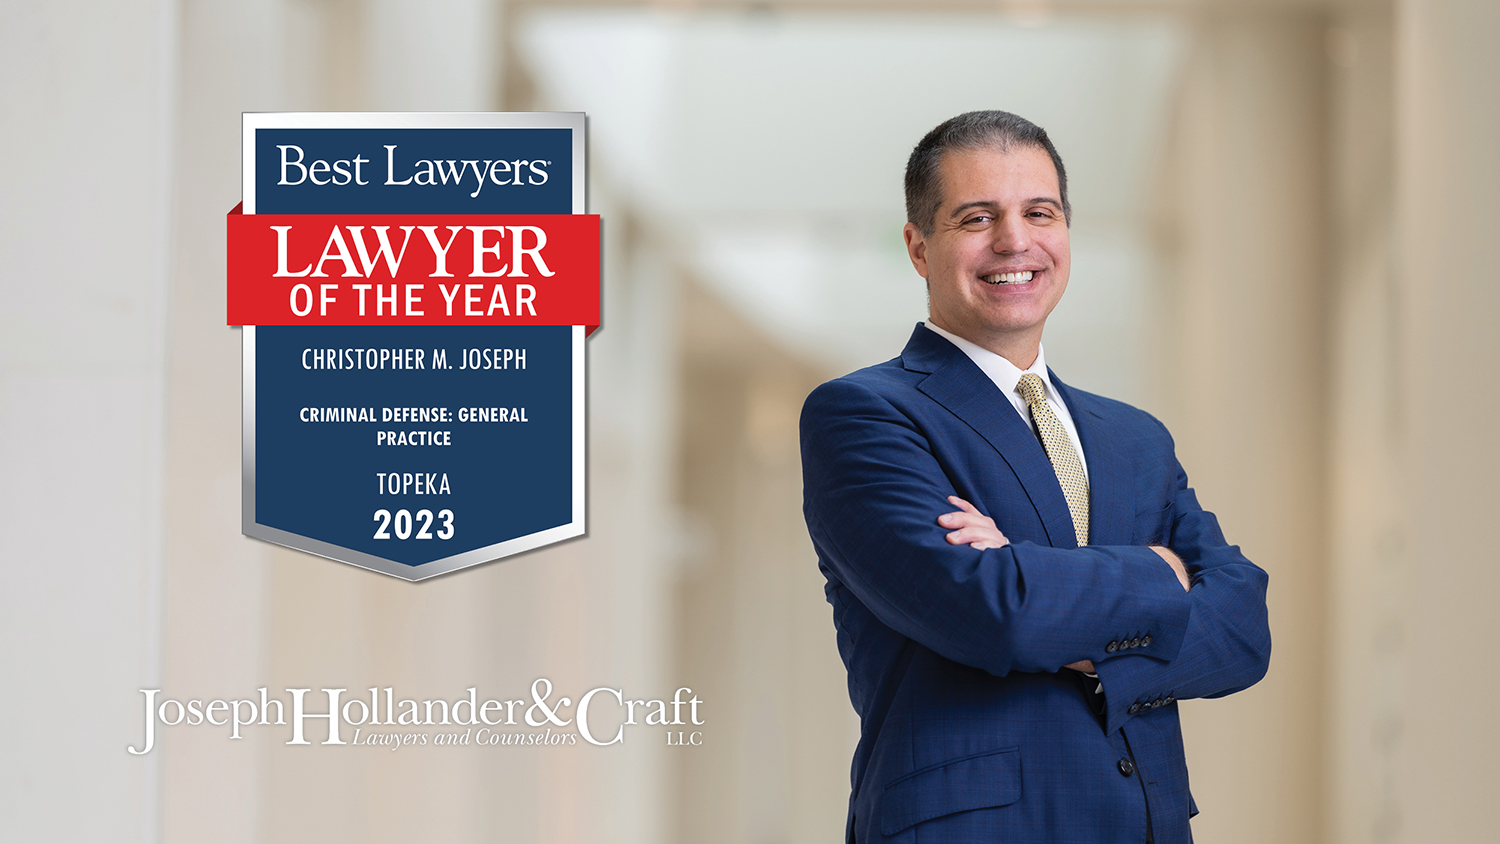 Chris Joseph Topeka criminal defense lawyer of the year 2023 best lawyers